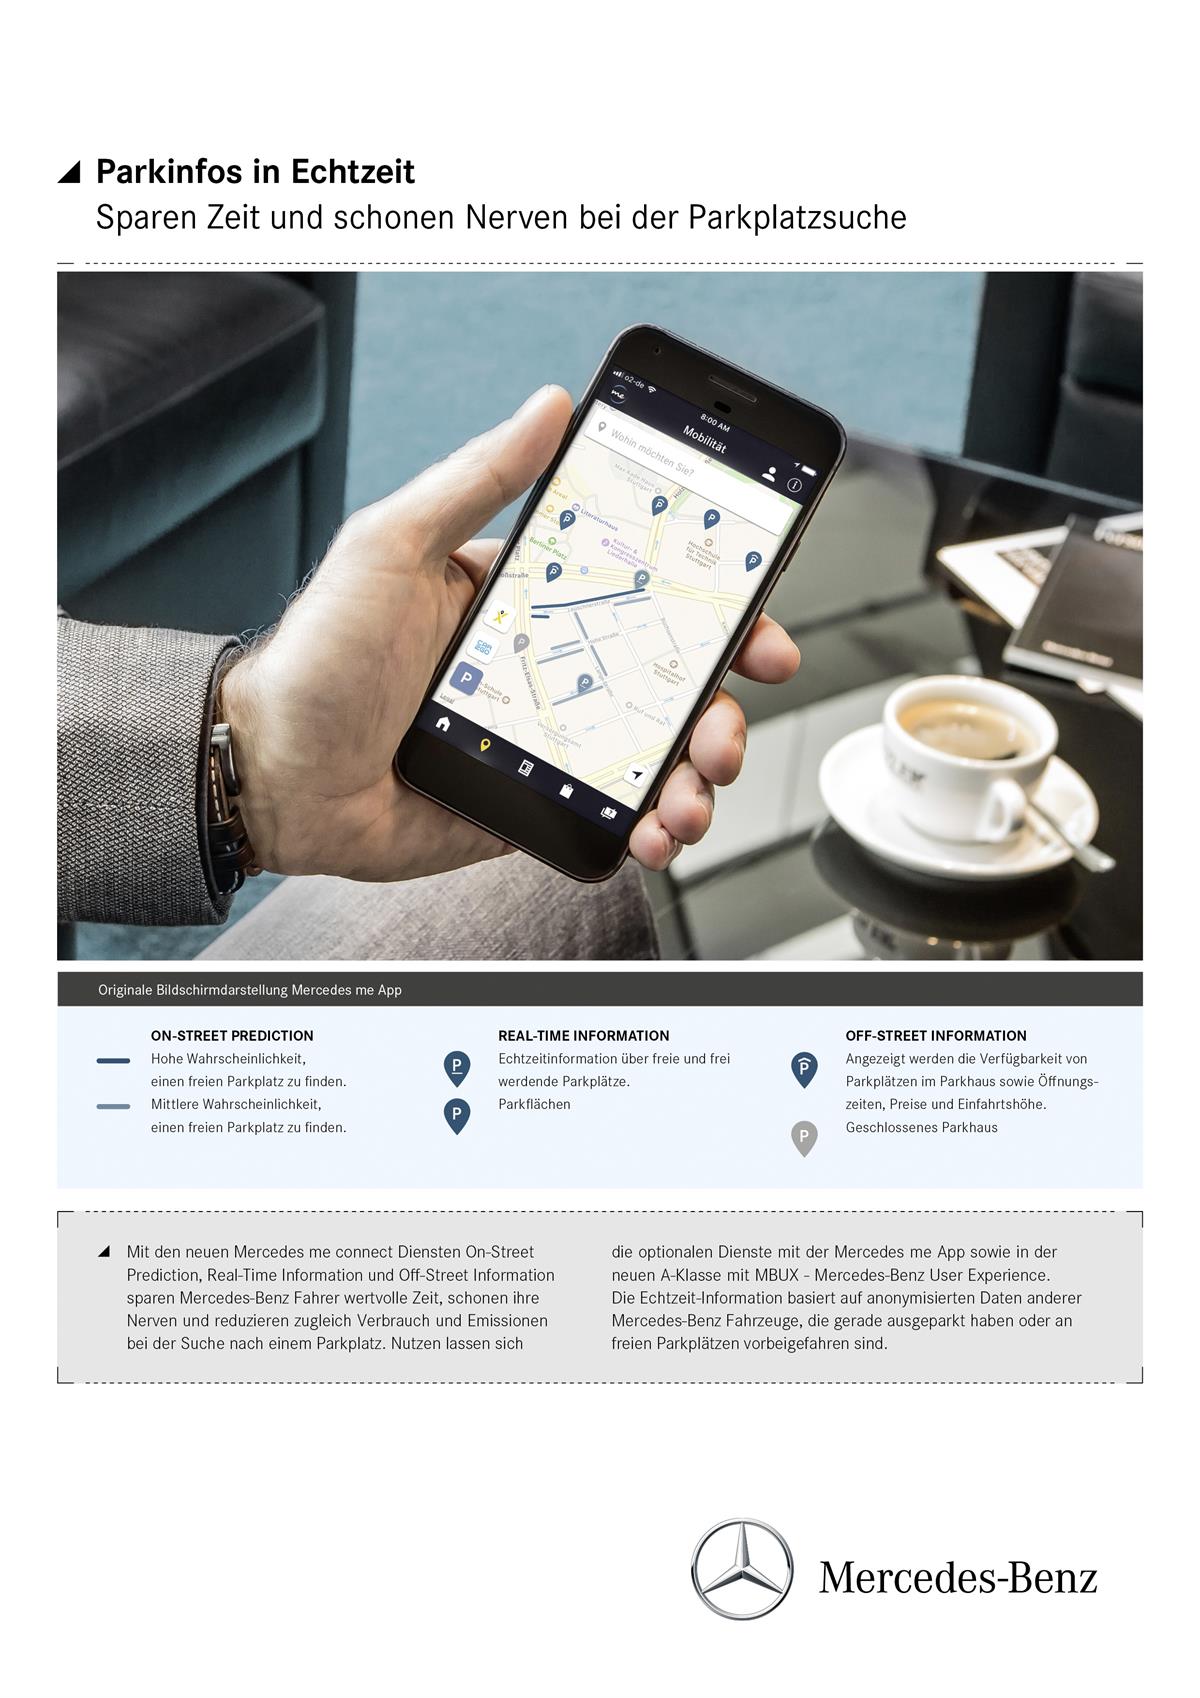 Die Mercedes me connect Dienste On-StreetPrediction, Real-Time Information und Off-Street Information